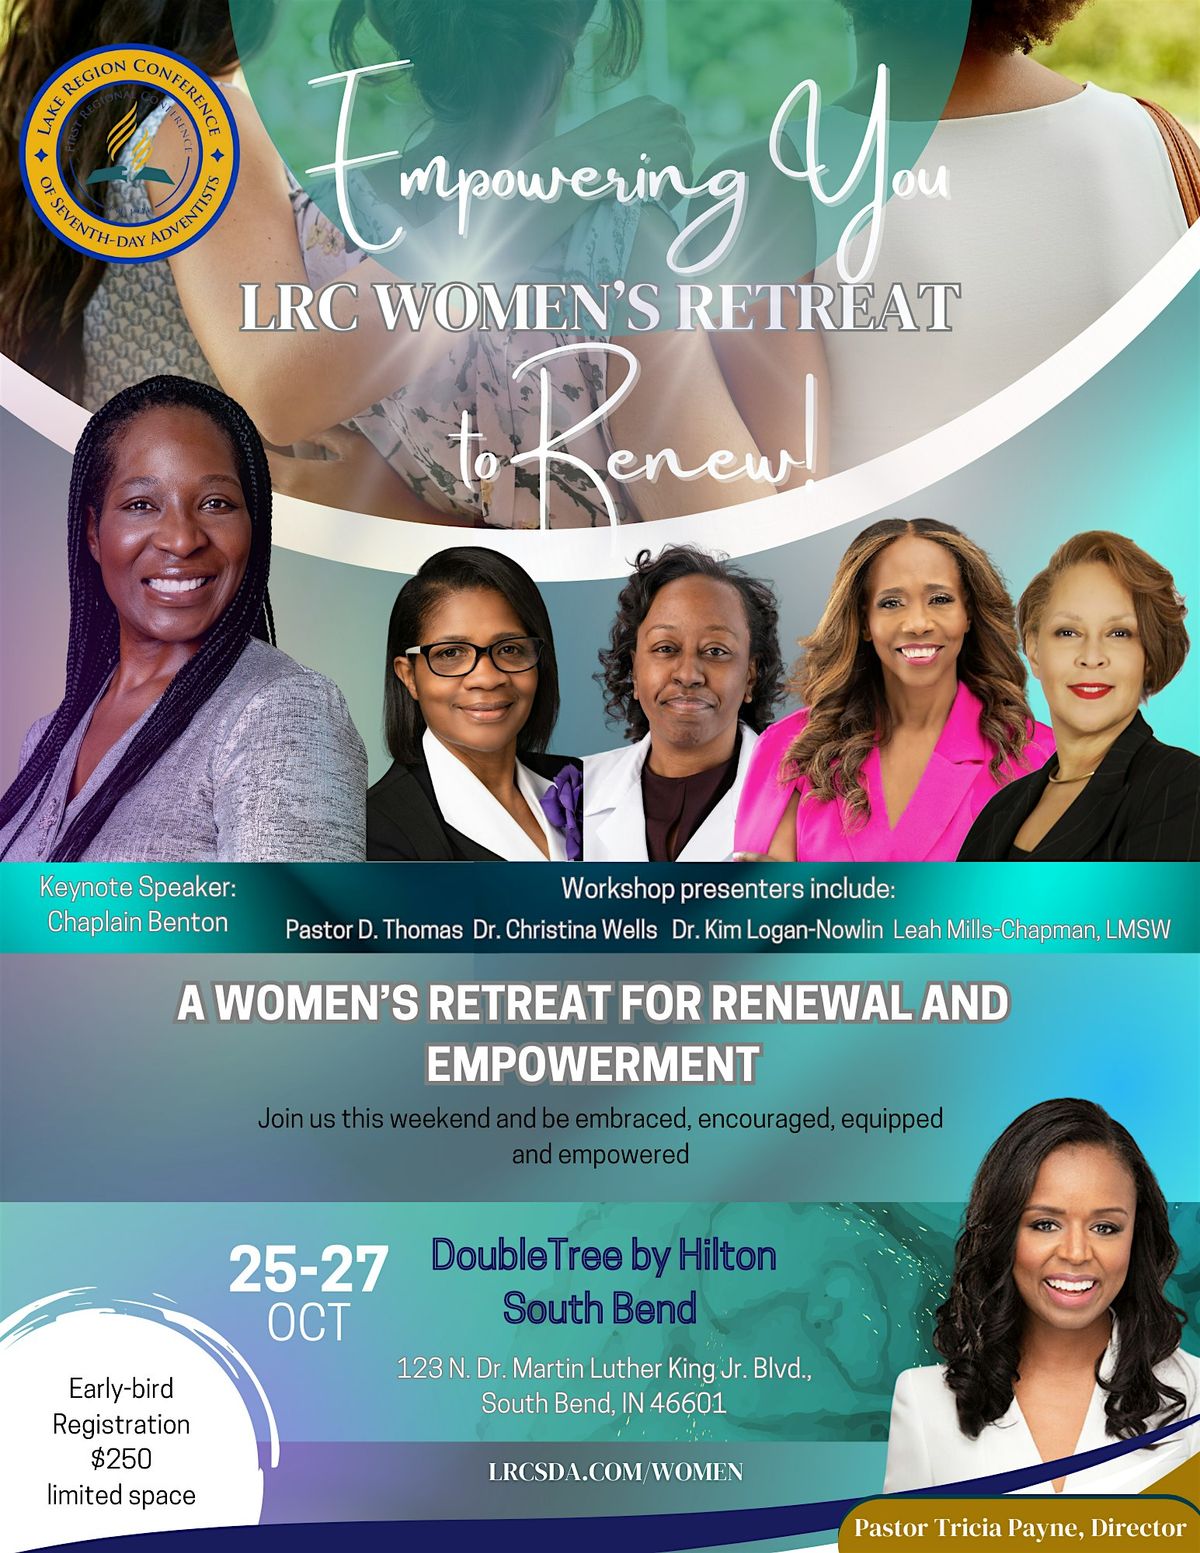 Empowering You to Renew! LRC Women's Retreat